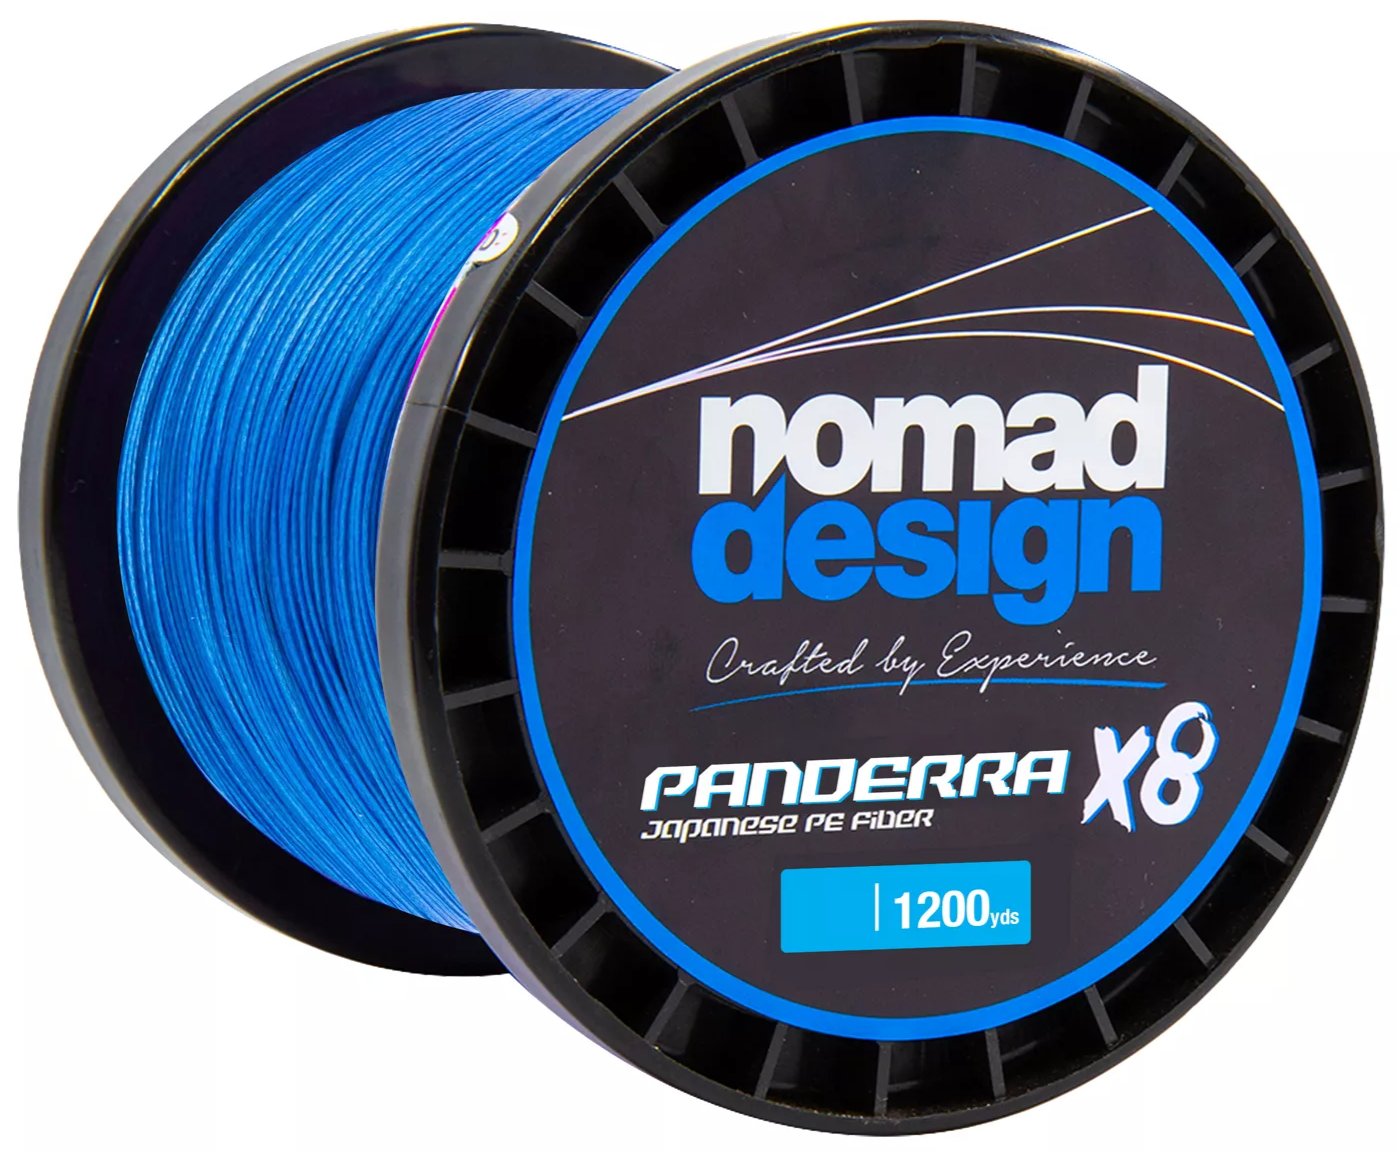 Nomad Design Panderra X4 Line - 300 yd. - 50 lb. - Moss Green